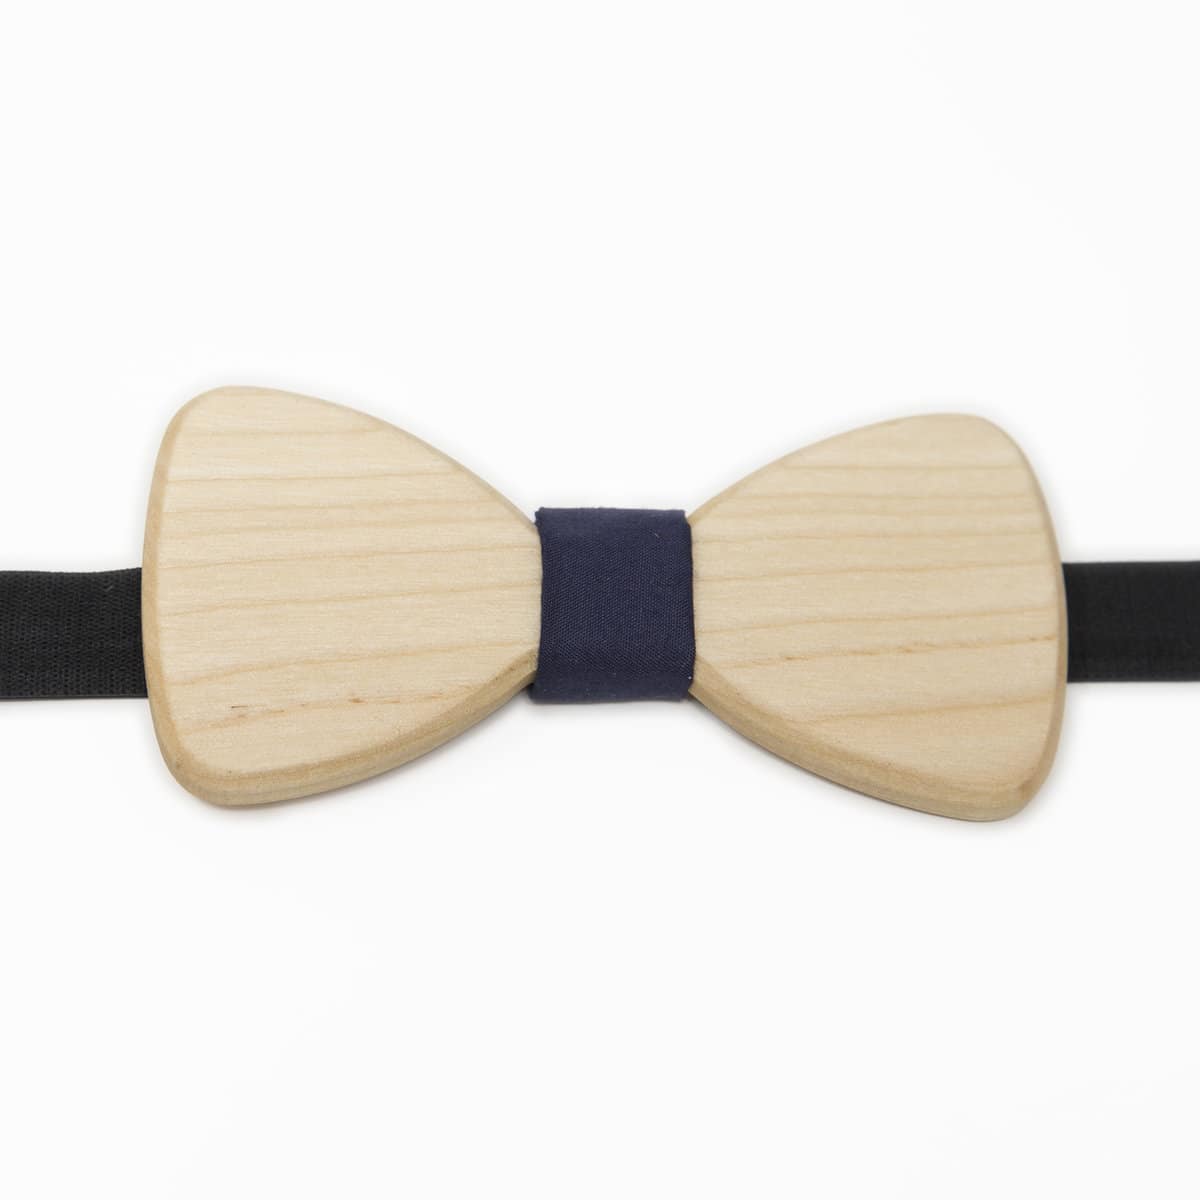 Noeud papillon en bois homme bleu marin - navy blue wooden bow tie for men